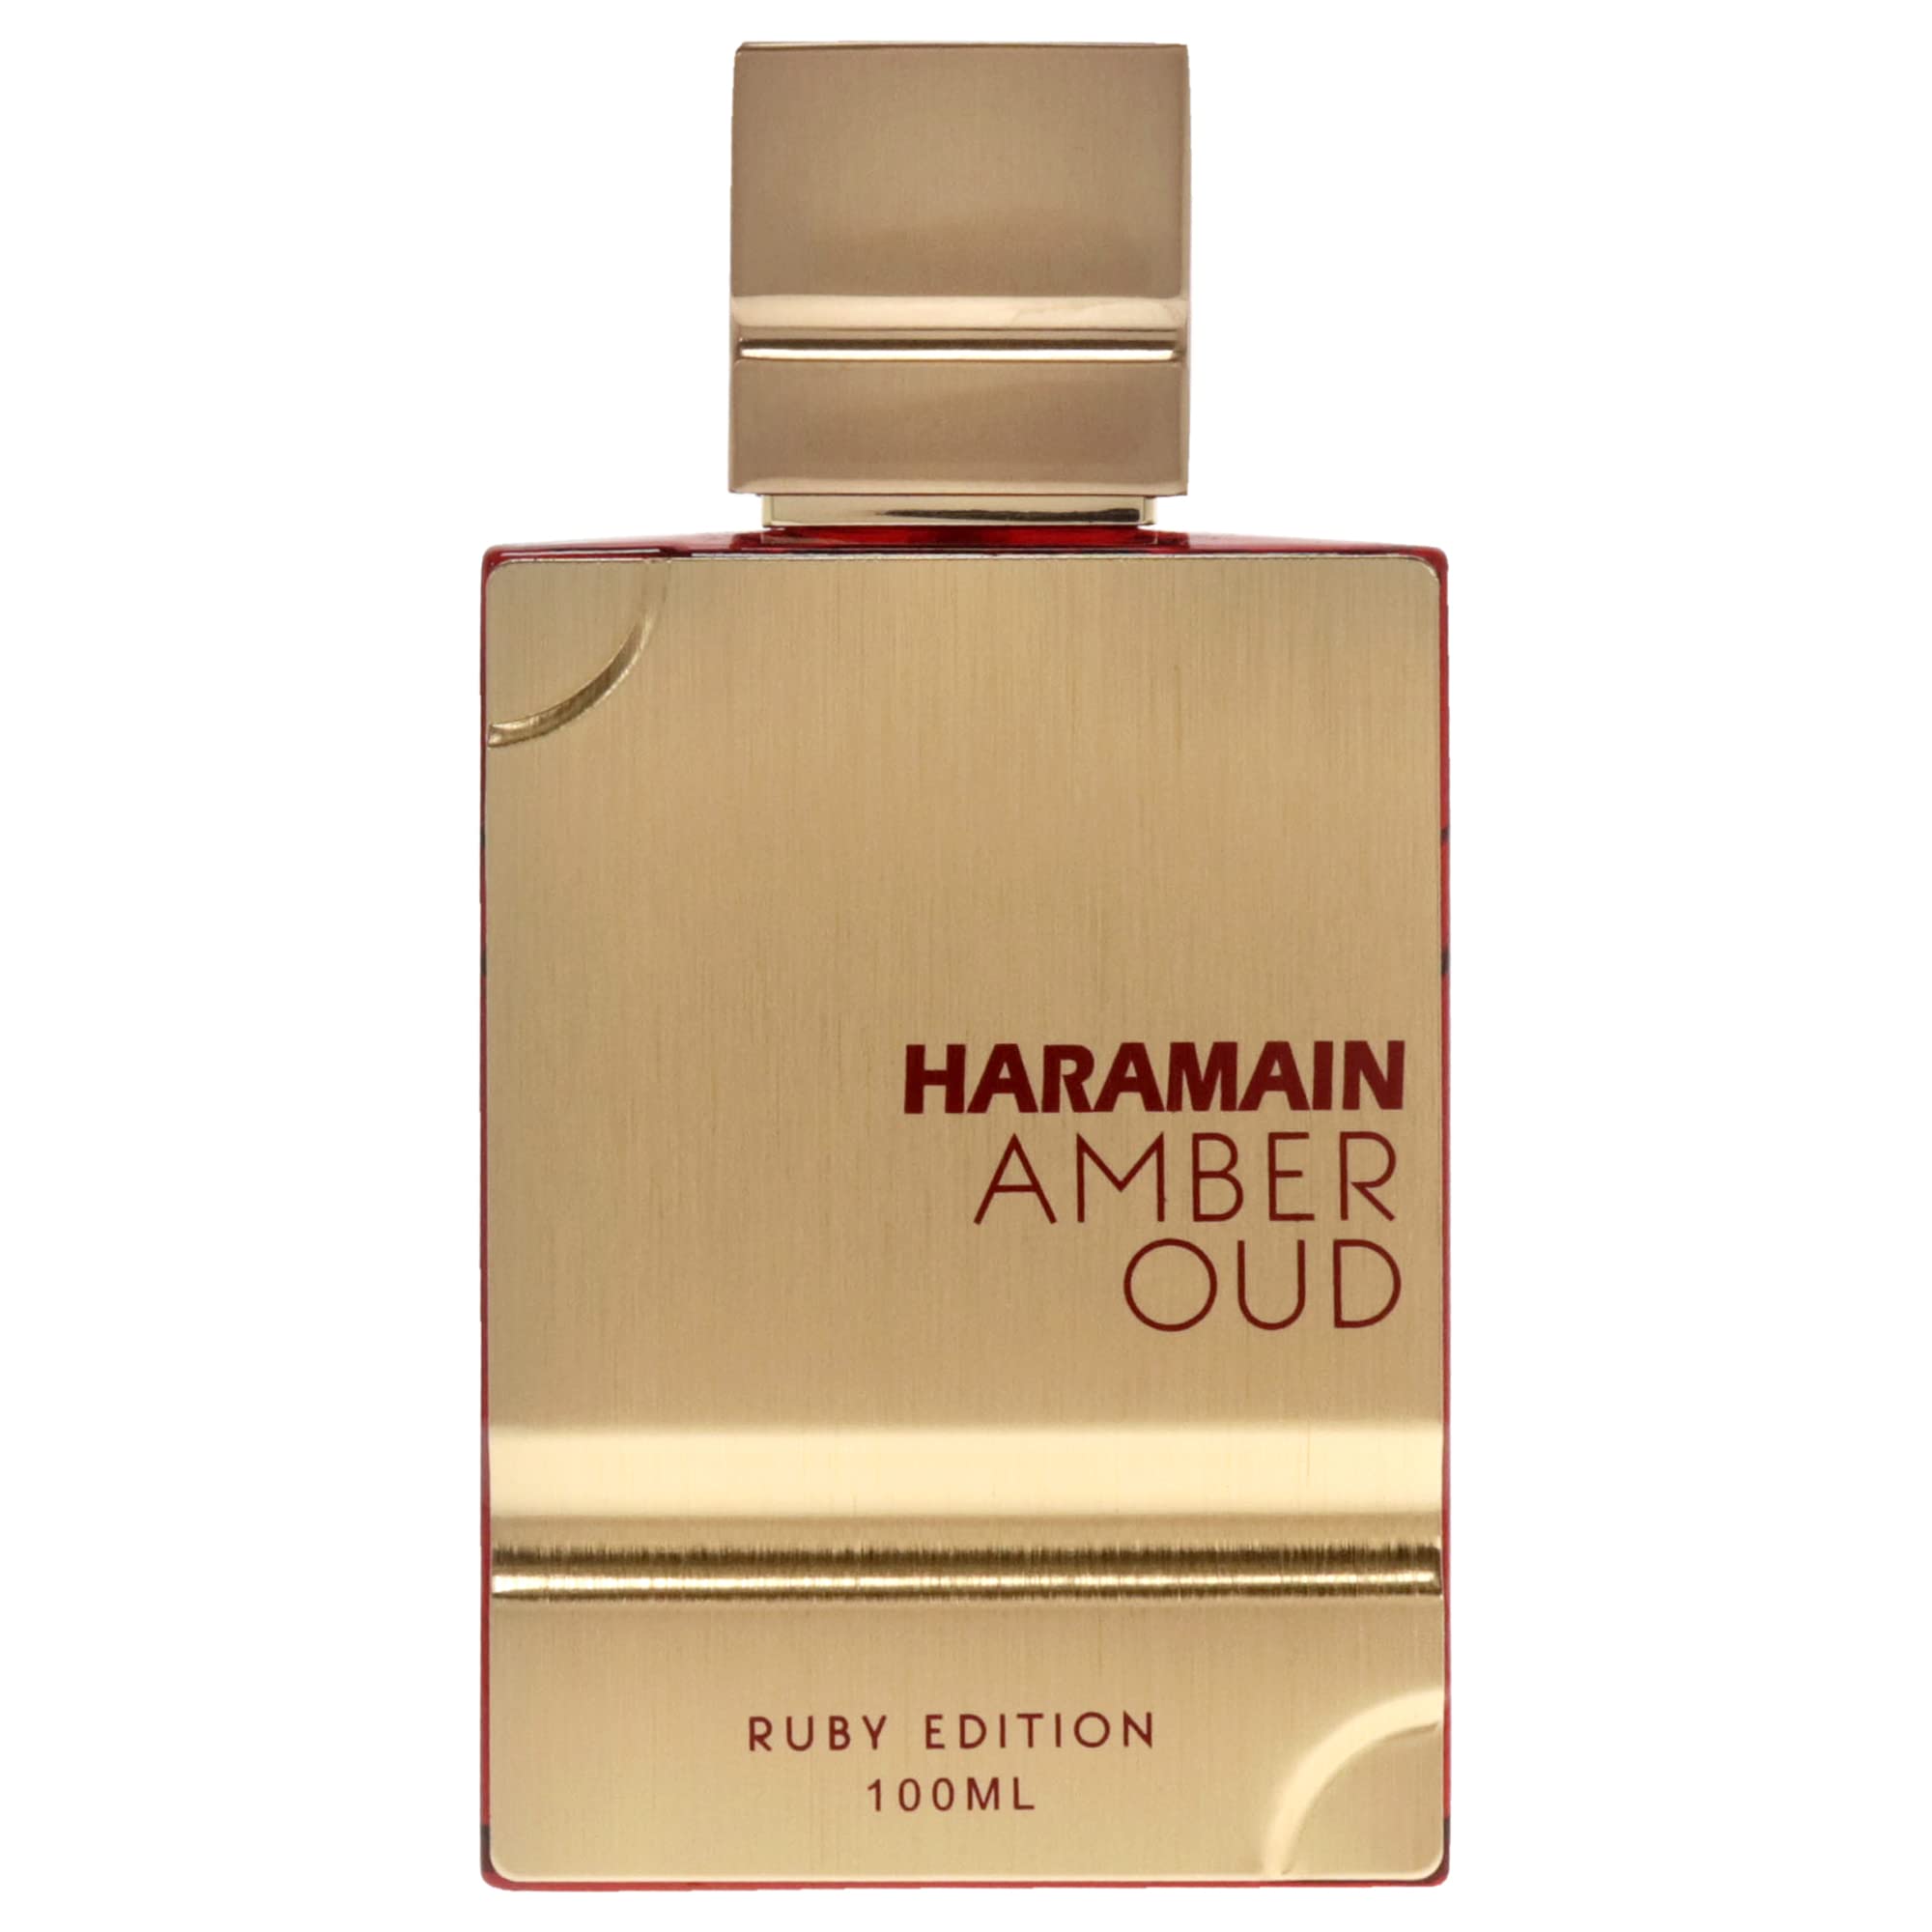 Al Haramain Amber Oud Ruby Eau De Parfum for Unisex 3.4 Ounce